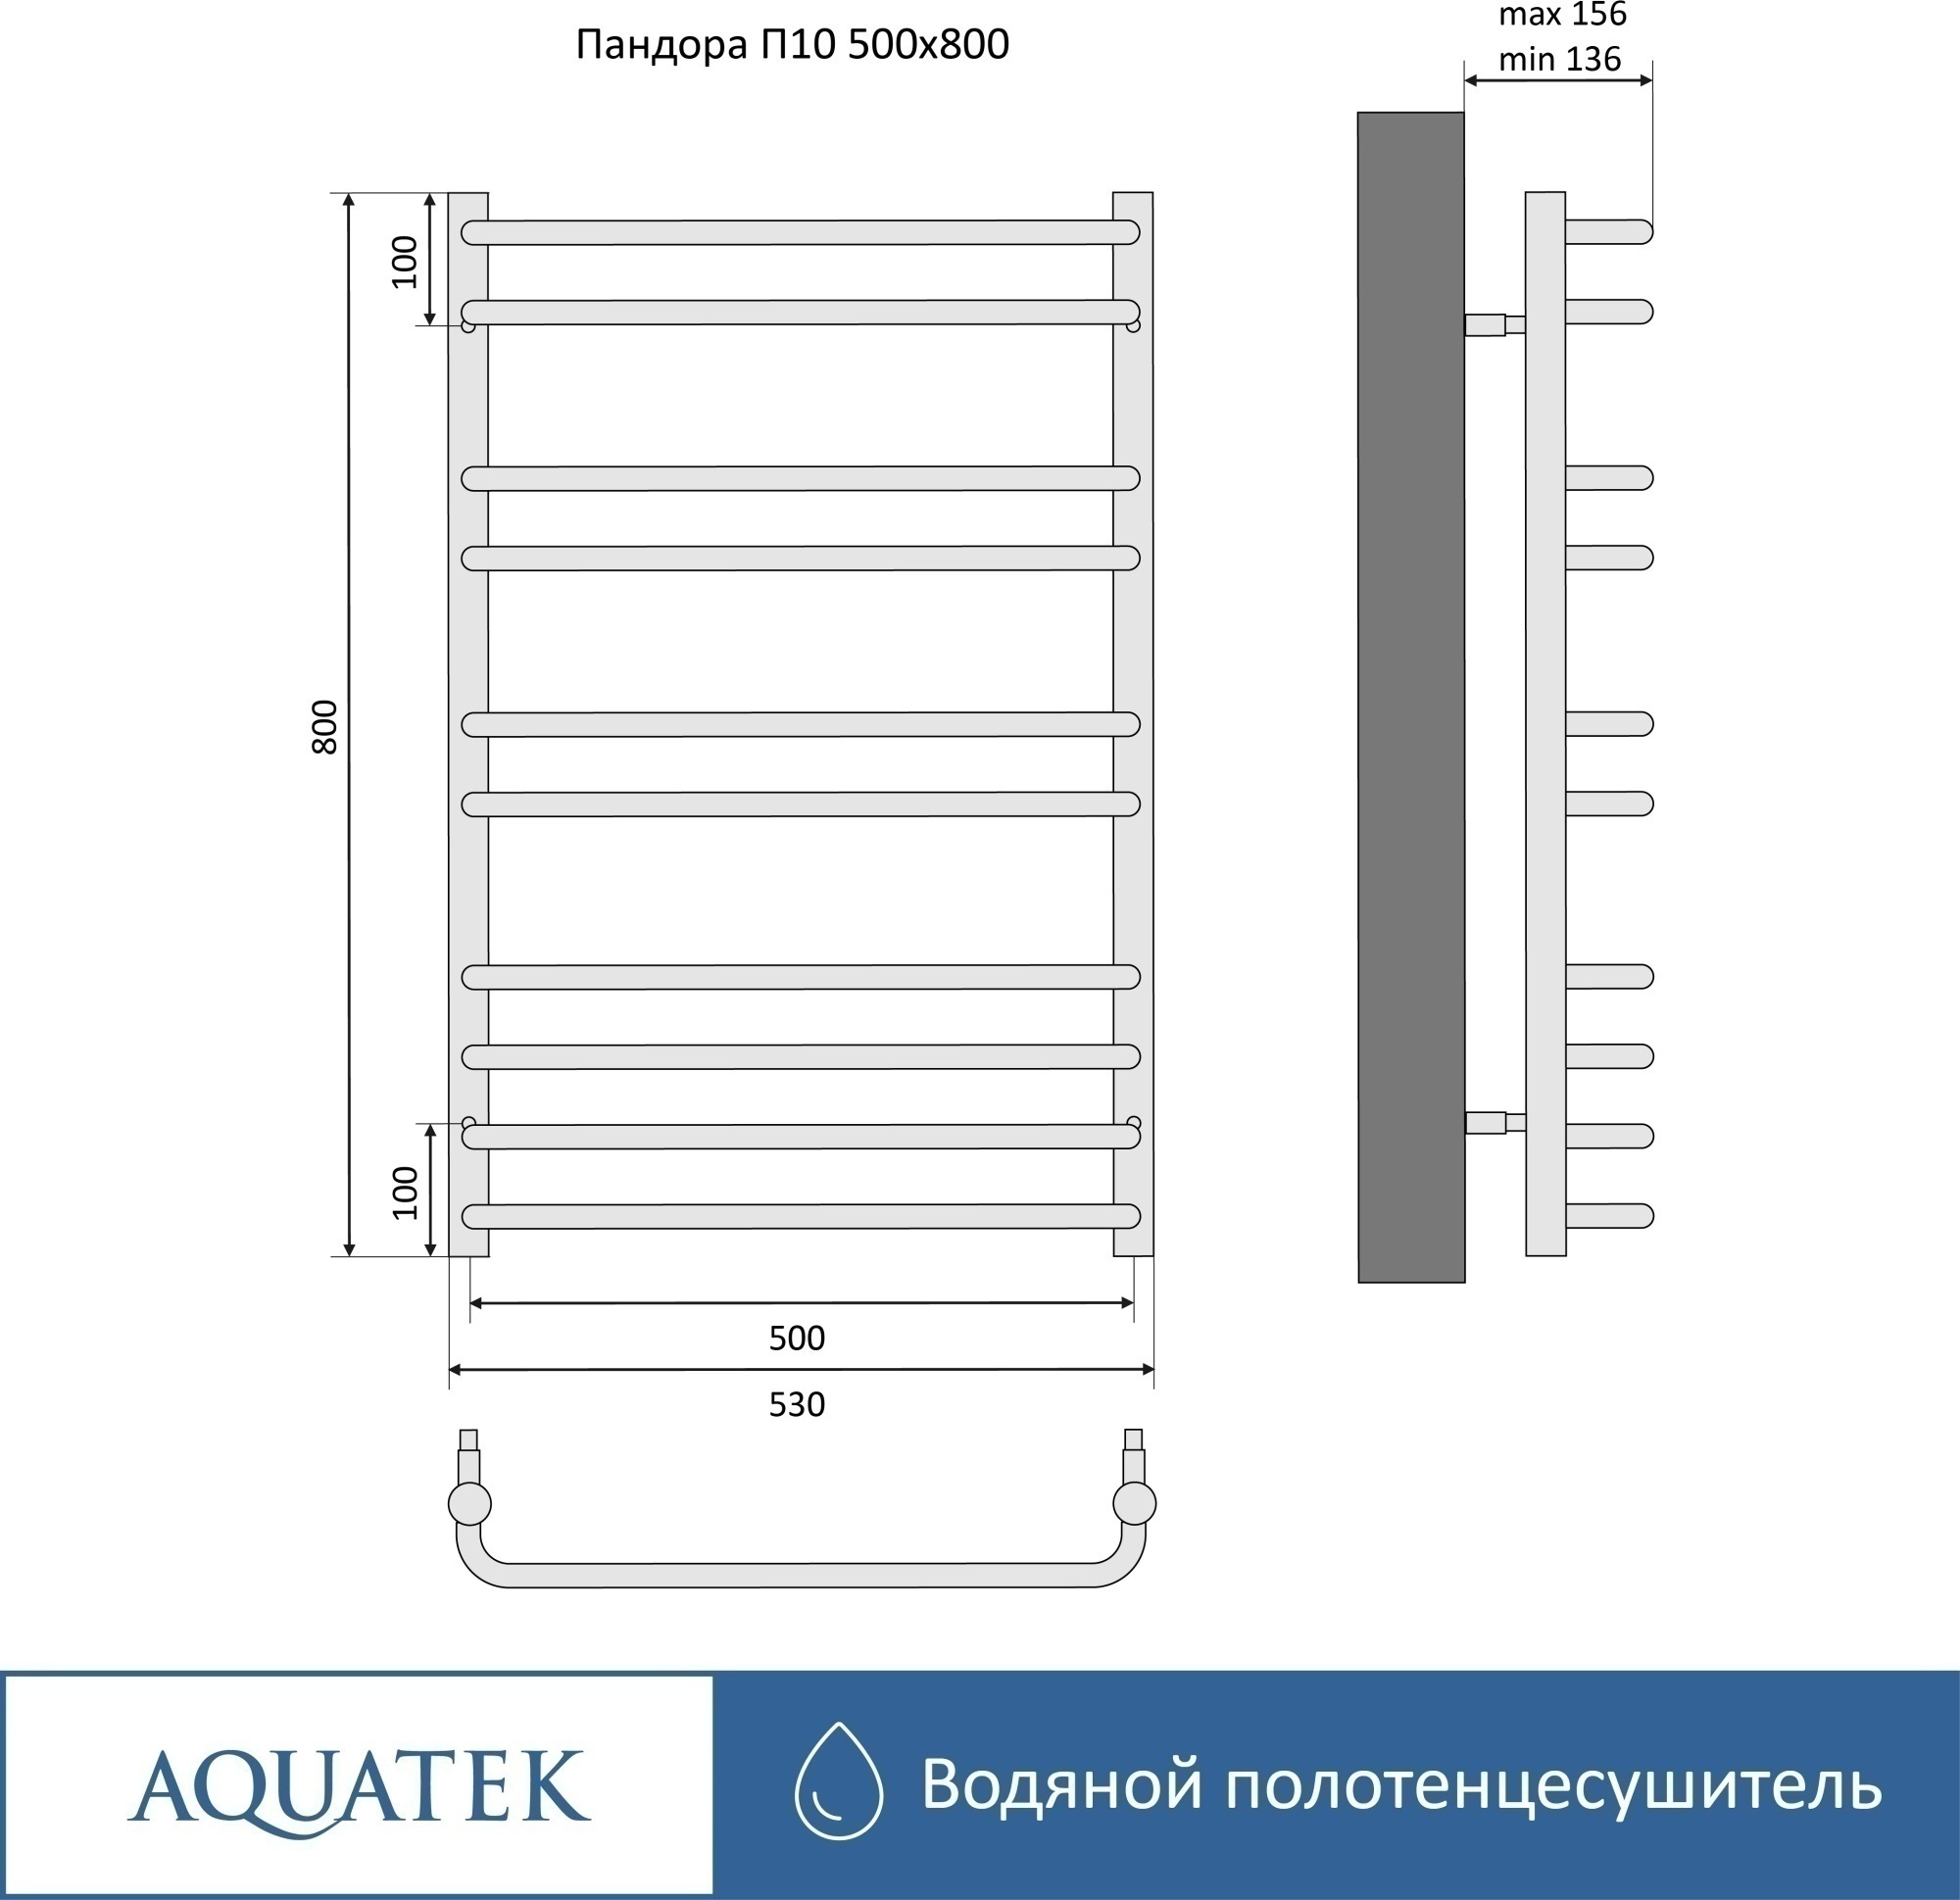 Полотенцесушитель водяной Aquatek Пандора П10 50x80 AQ RRС1080BL